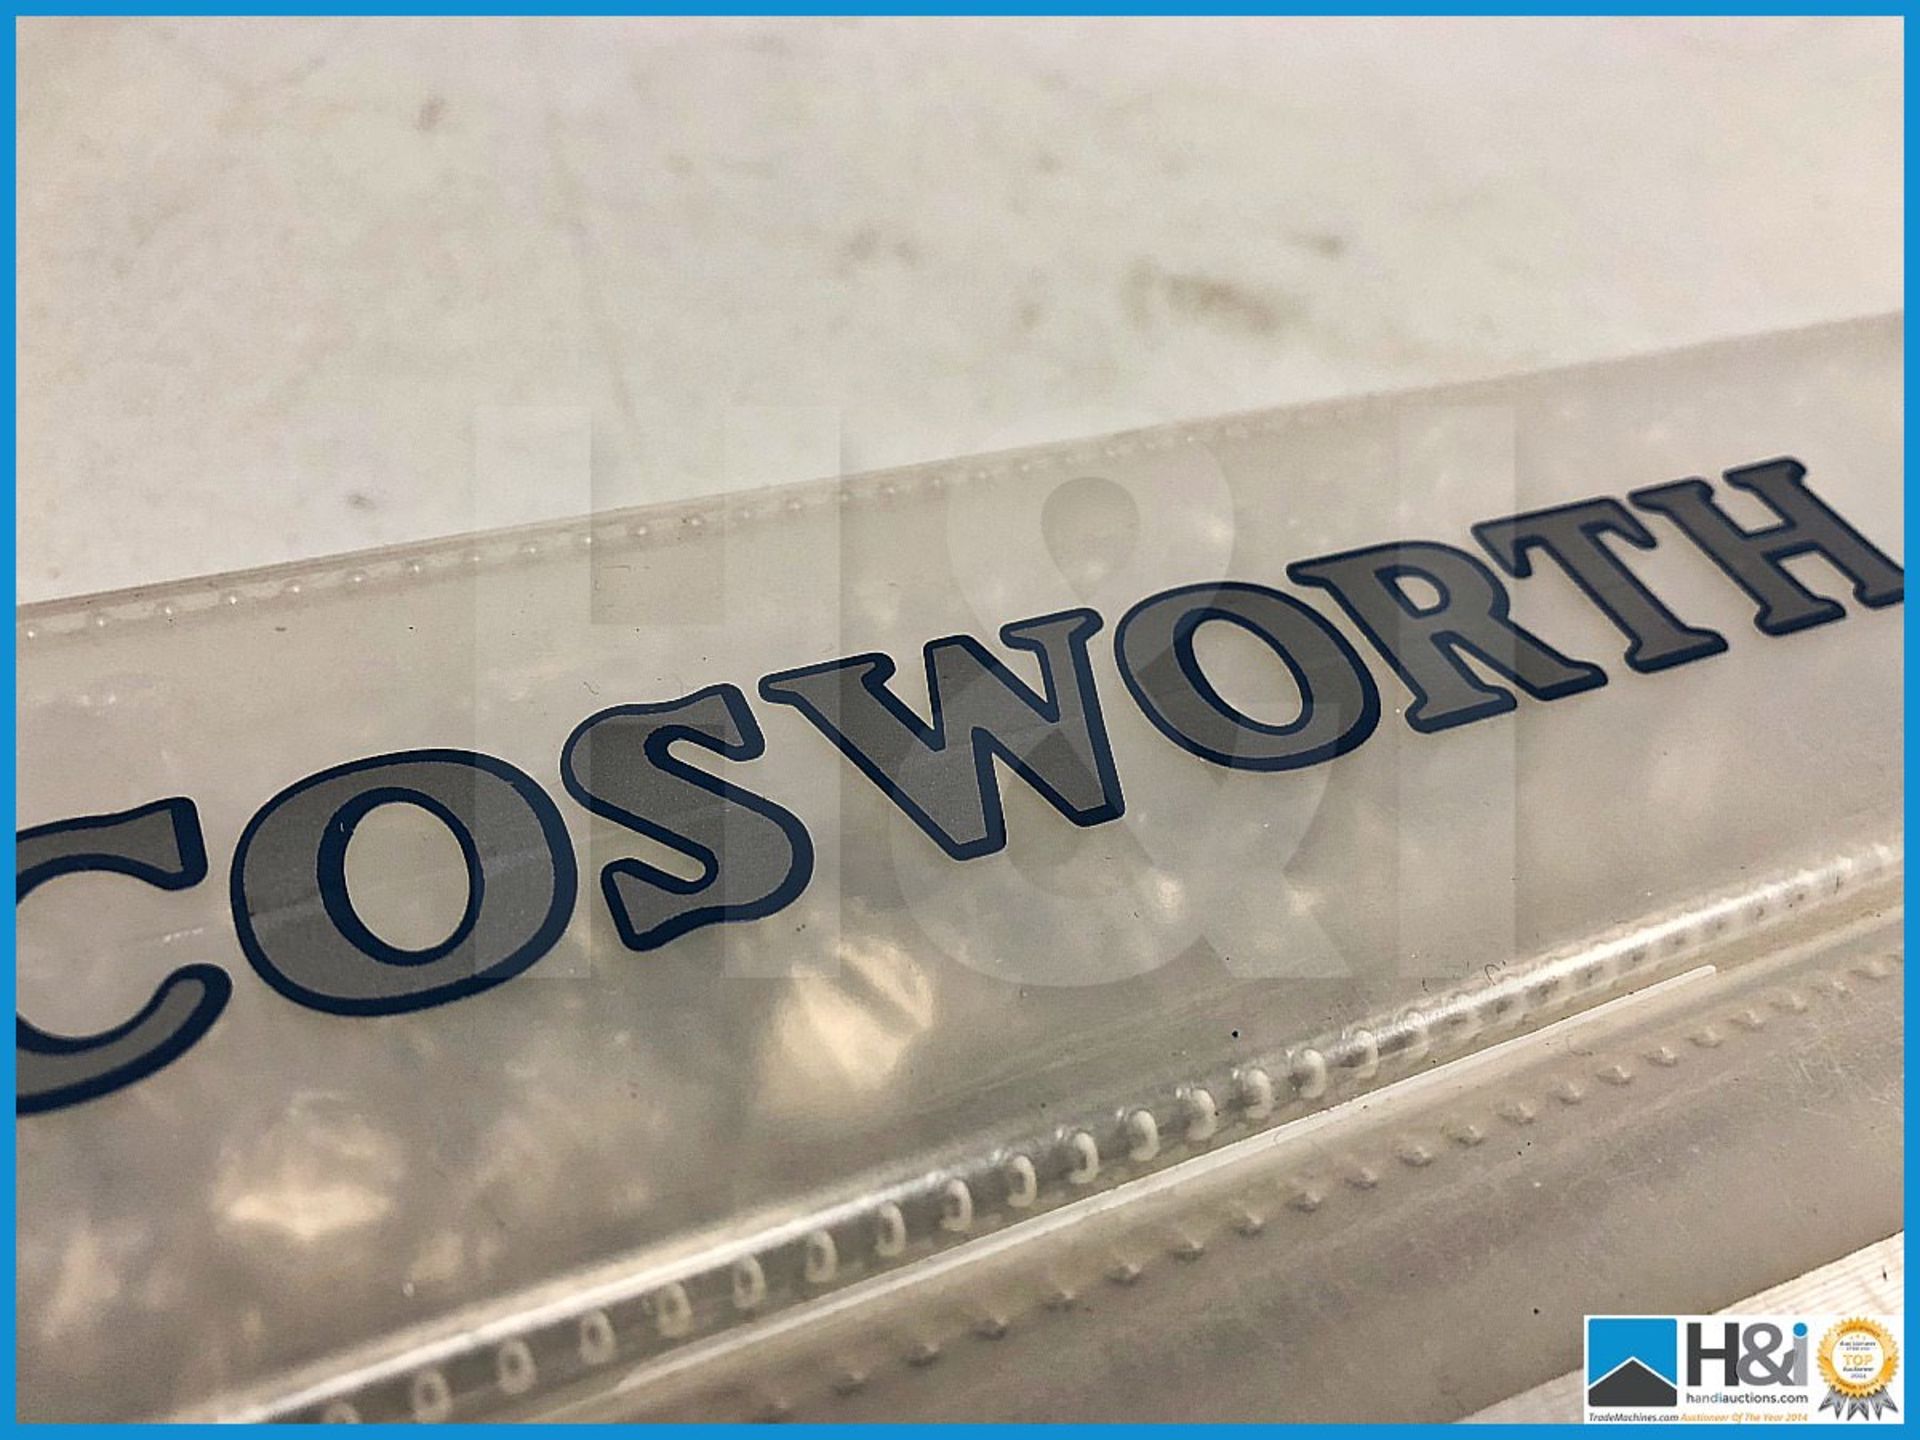 Cosworth Mitsubishi Evo 4G63 Evo8 M3 camshaft set. Code: 20002513 - Image 3 of 3